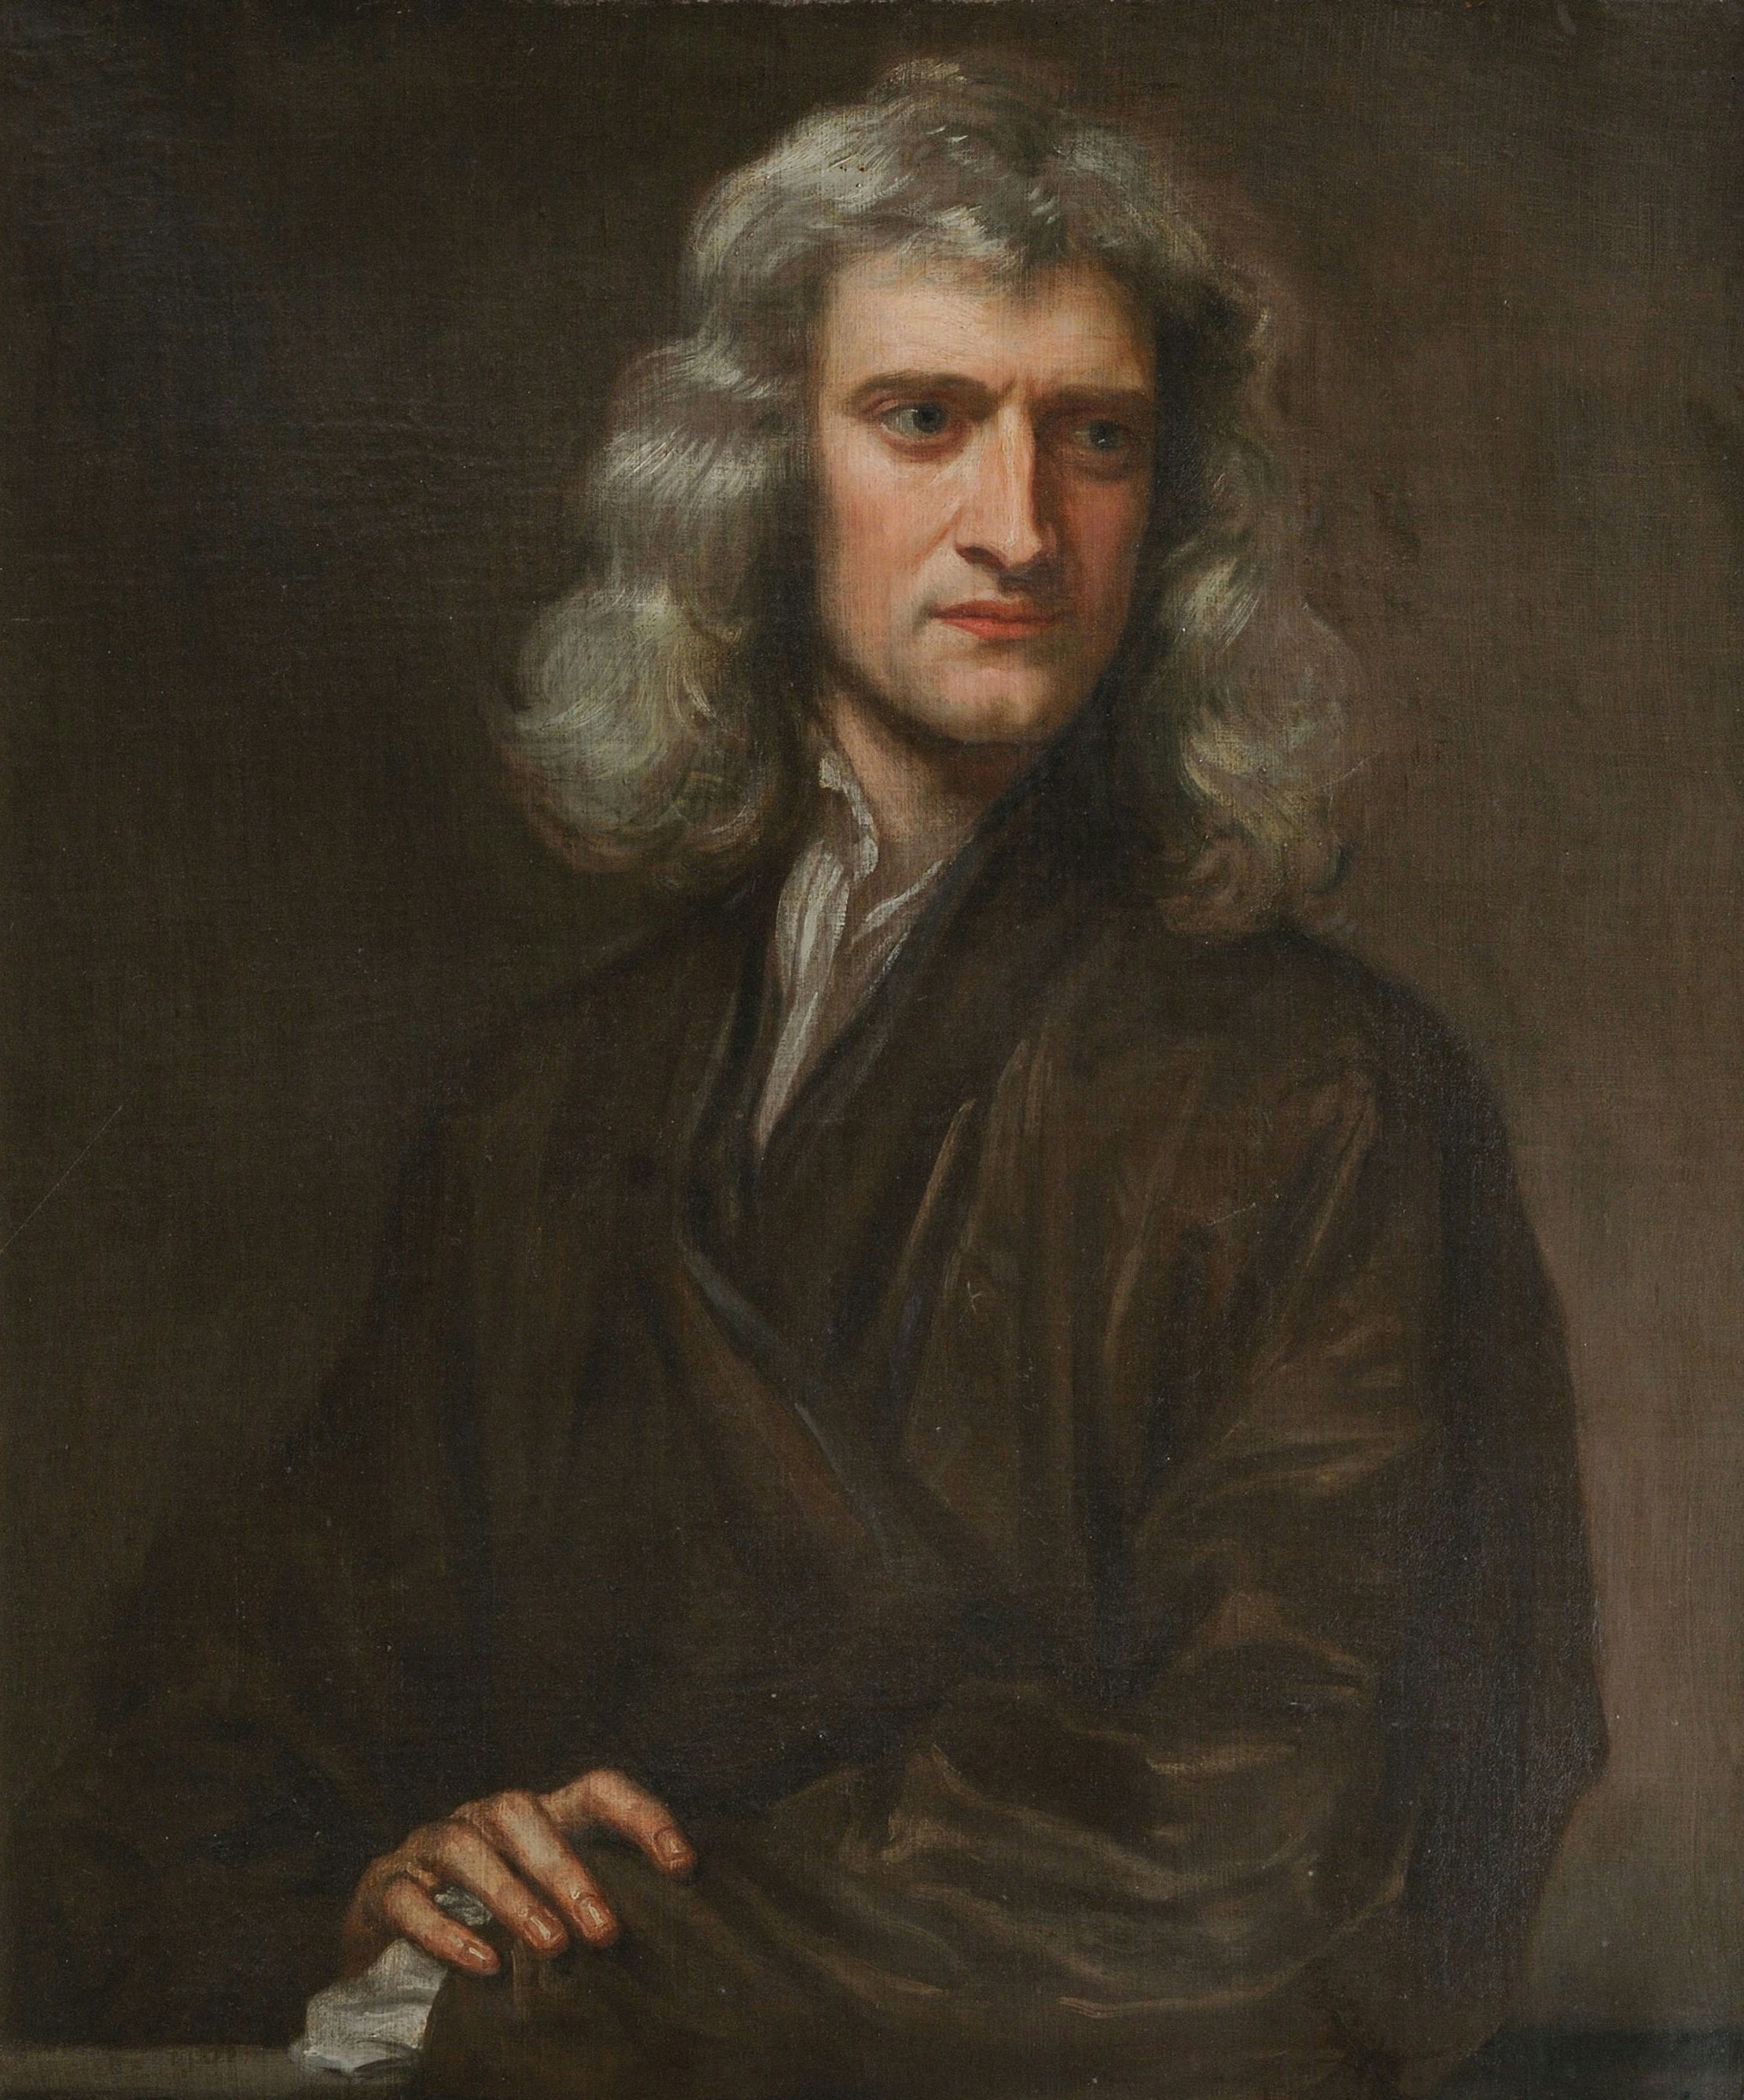 Senhor Isaac Newton